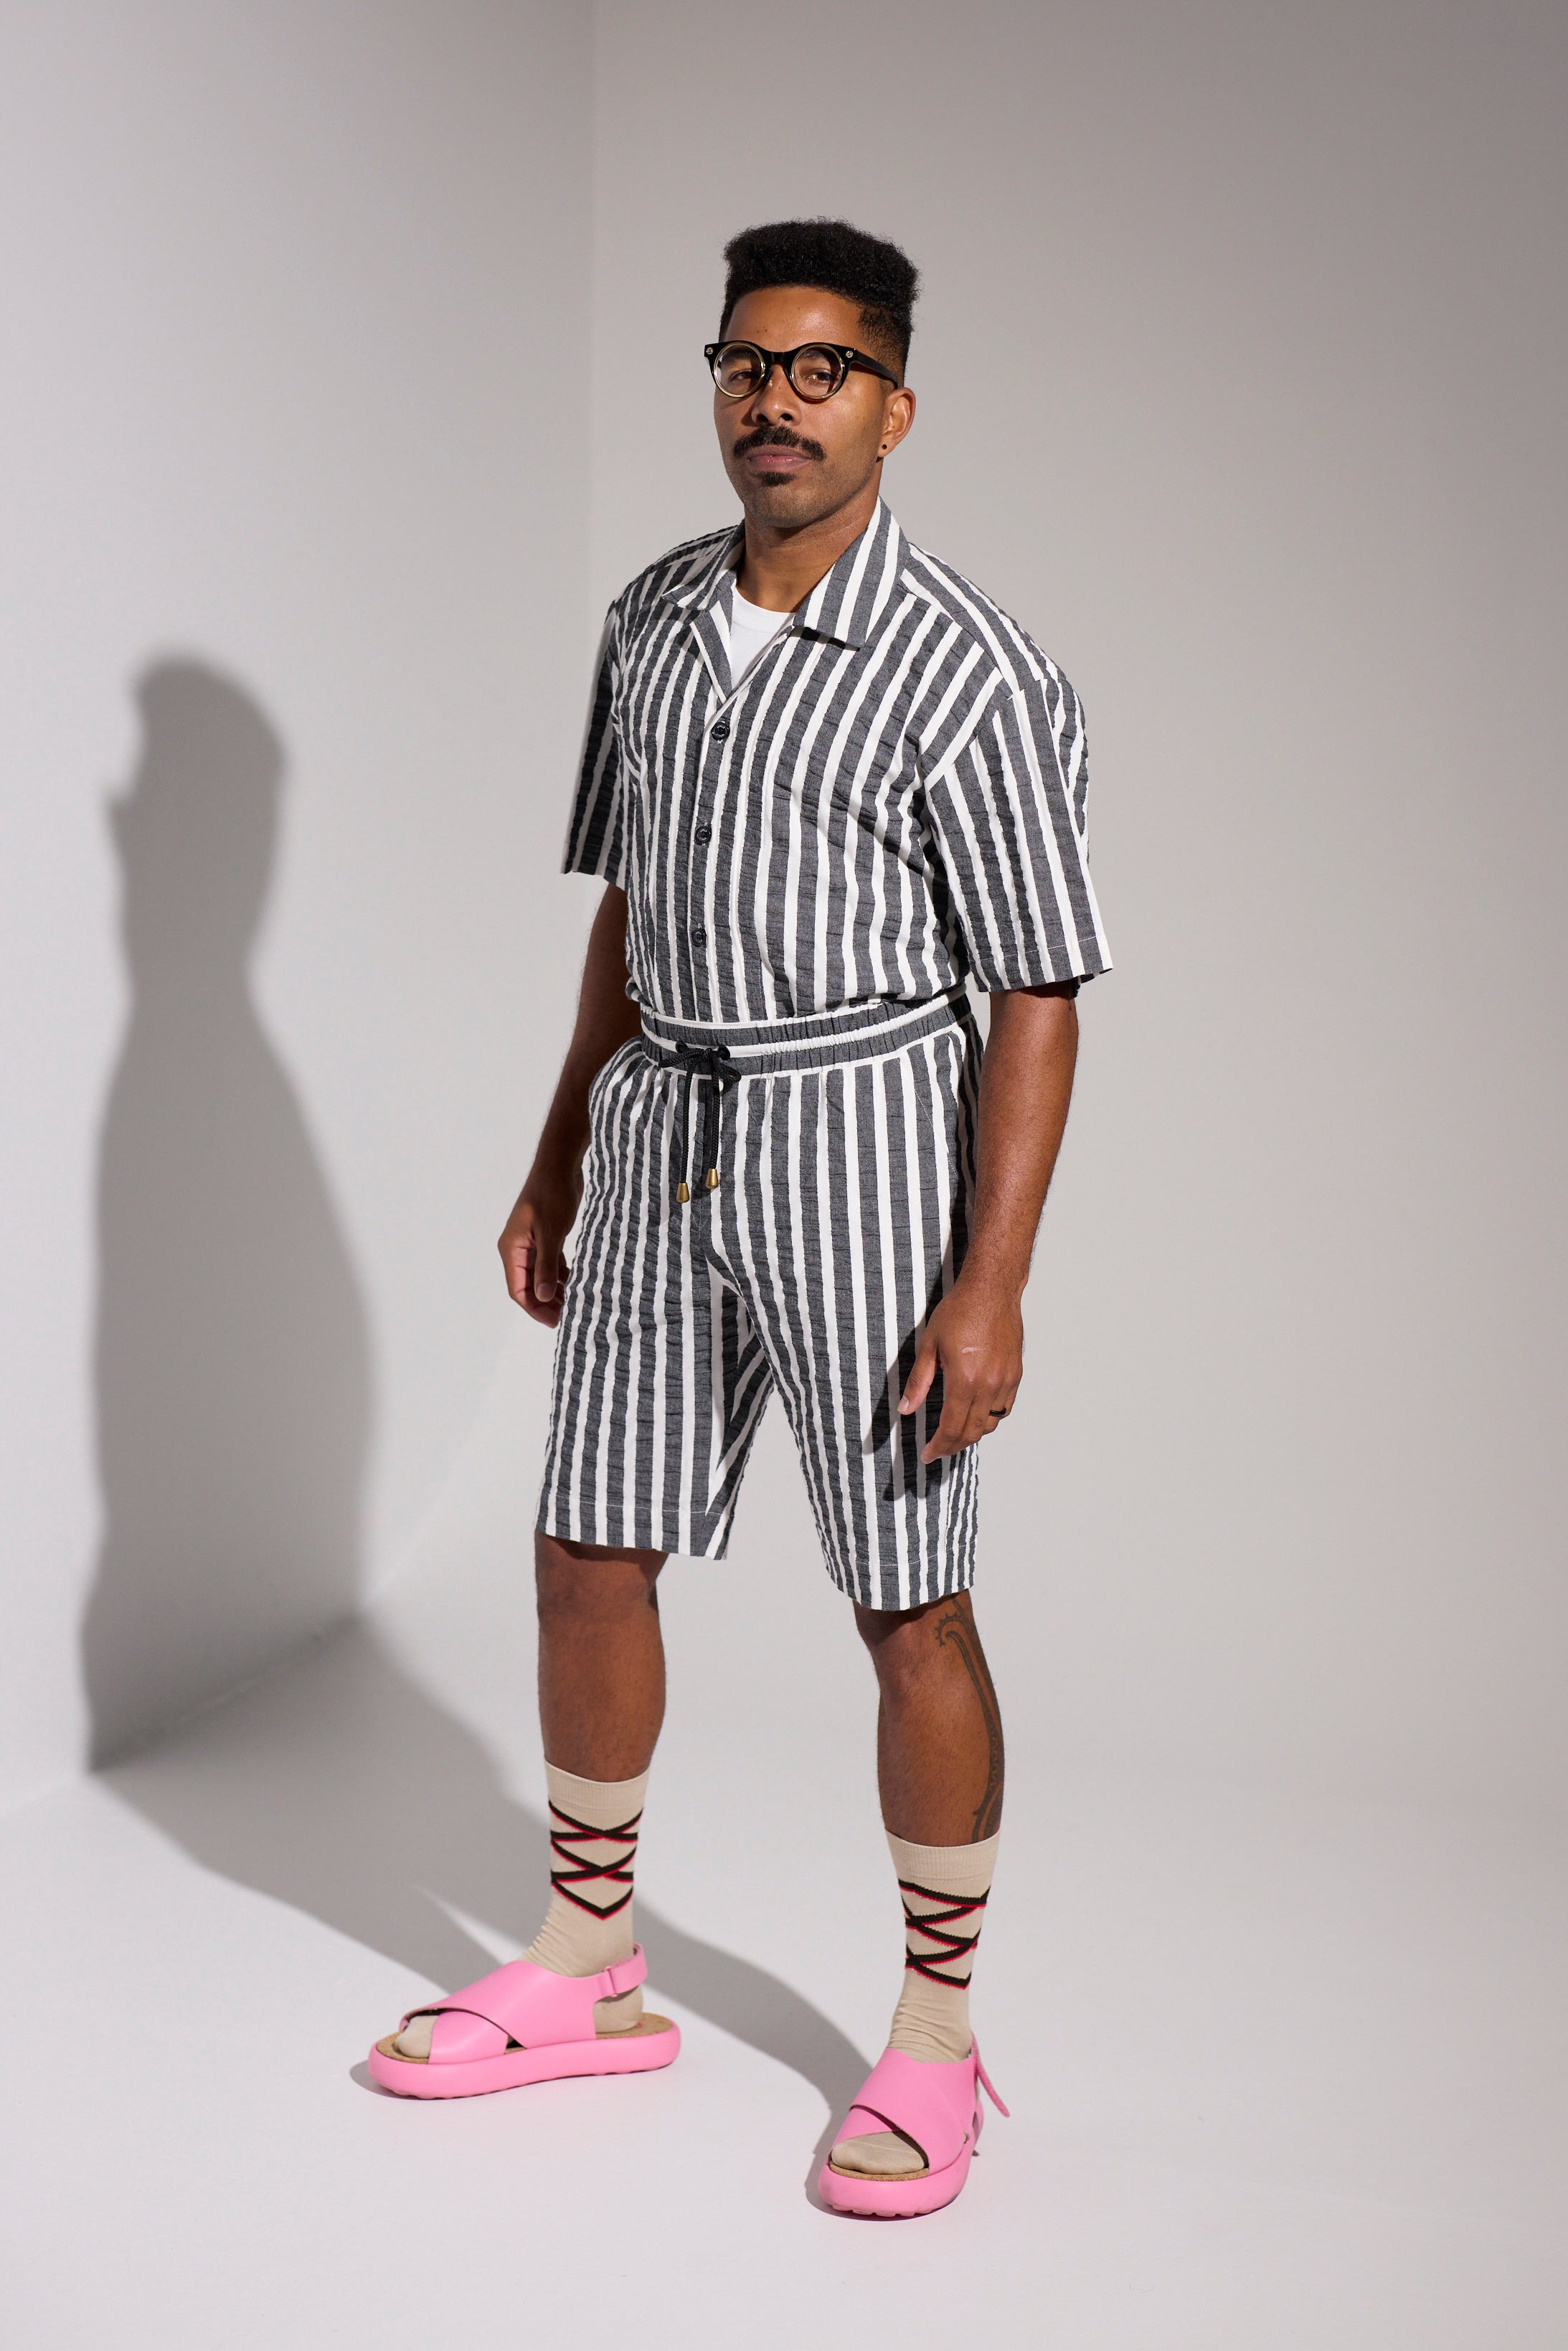 WORLDman 5151B Quincy S/S Bowling Shirt Seersucker Stripe Black & White